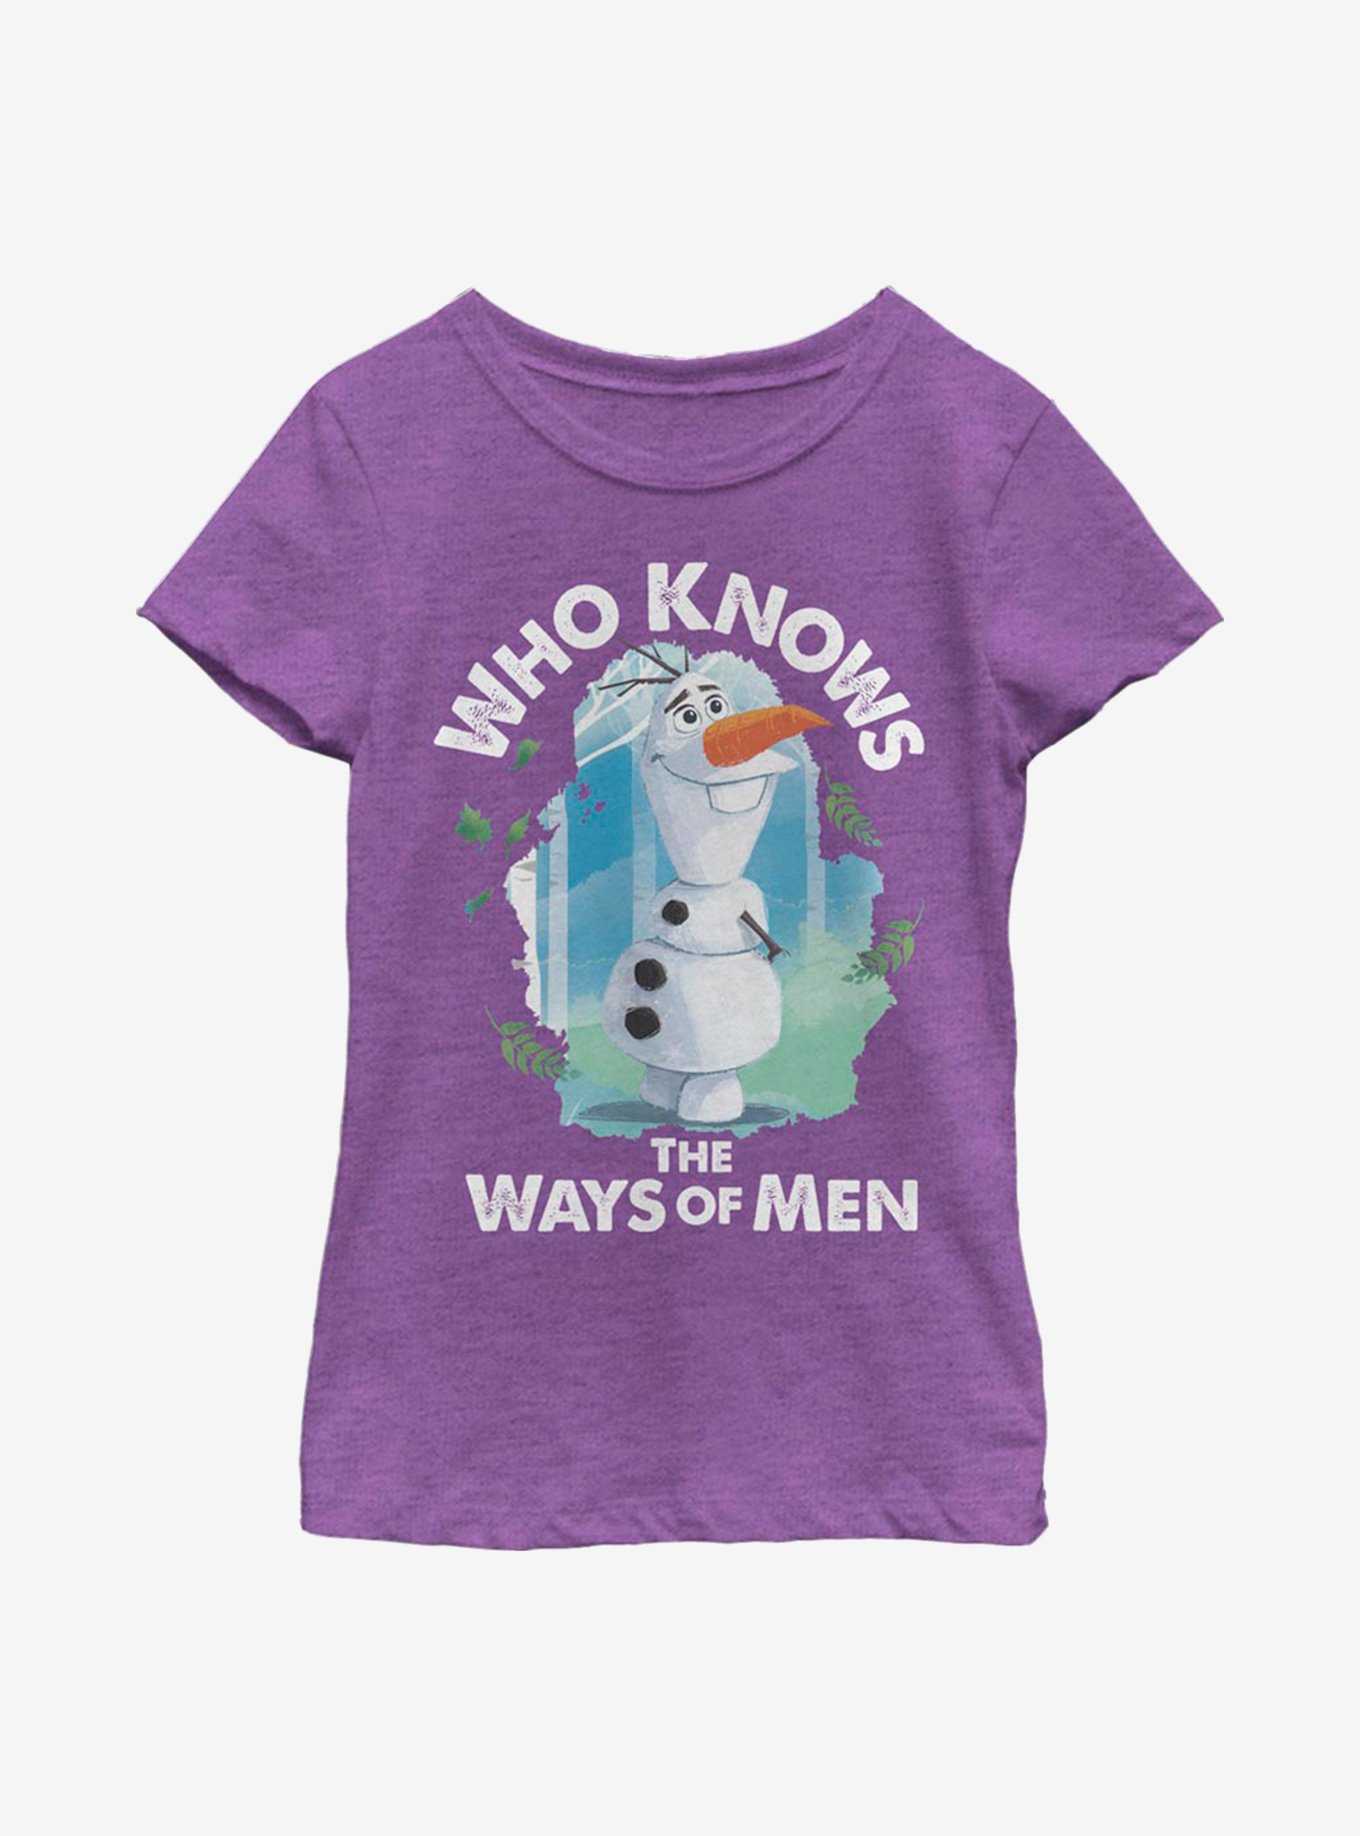 Disney Frozen 2 Ways Of Men Youth Girls T-Shirt, , hi-res